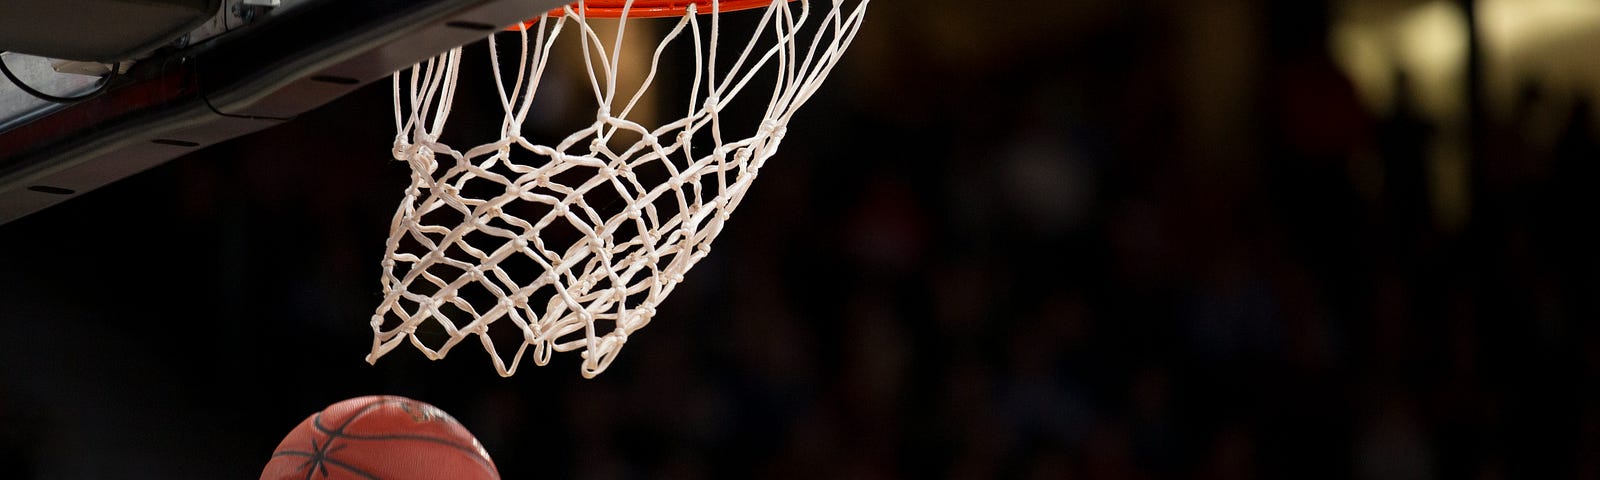 Monitoring NBA injuries with Python, by Sébastien Cararo, Analytics  Vidhya